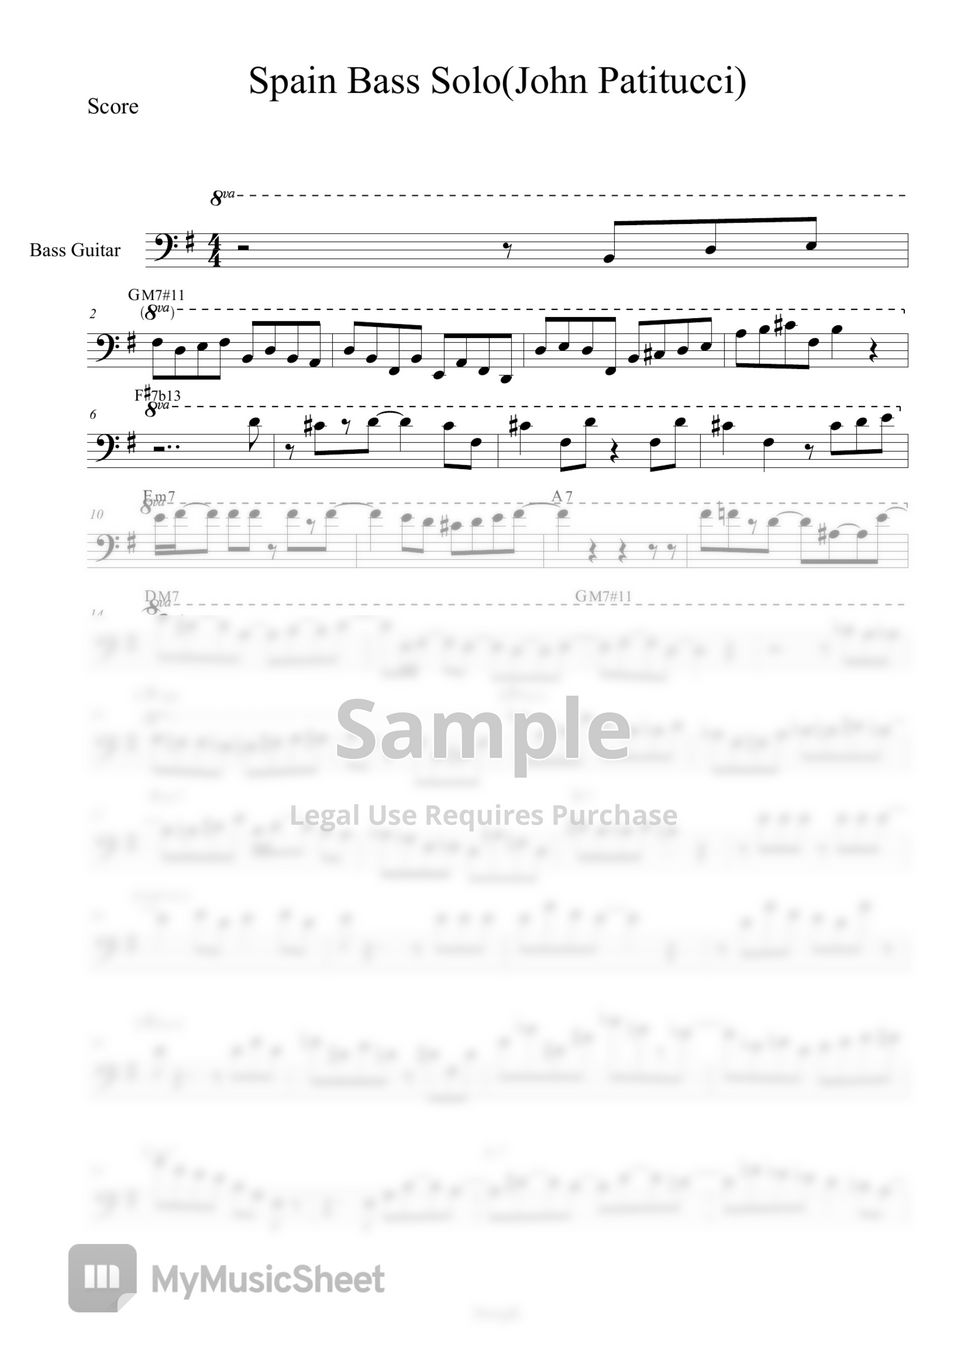 Chick Corea - Spain (john patitucci Bass Solo transcription) by DongK